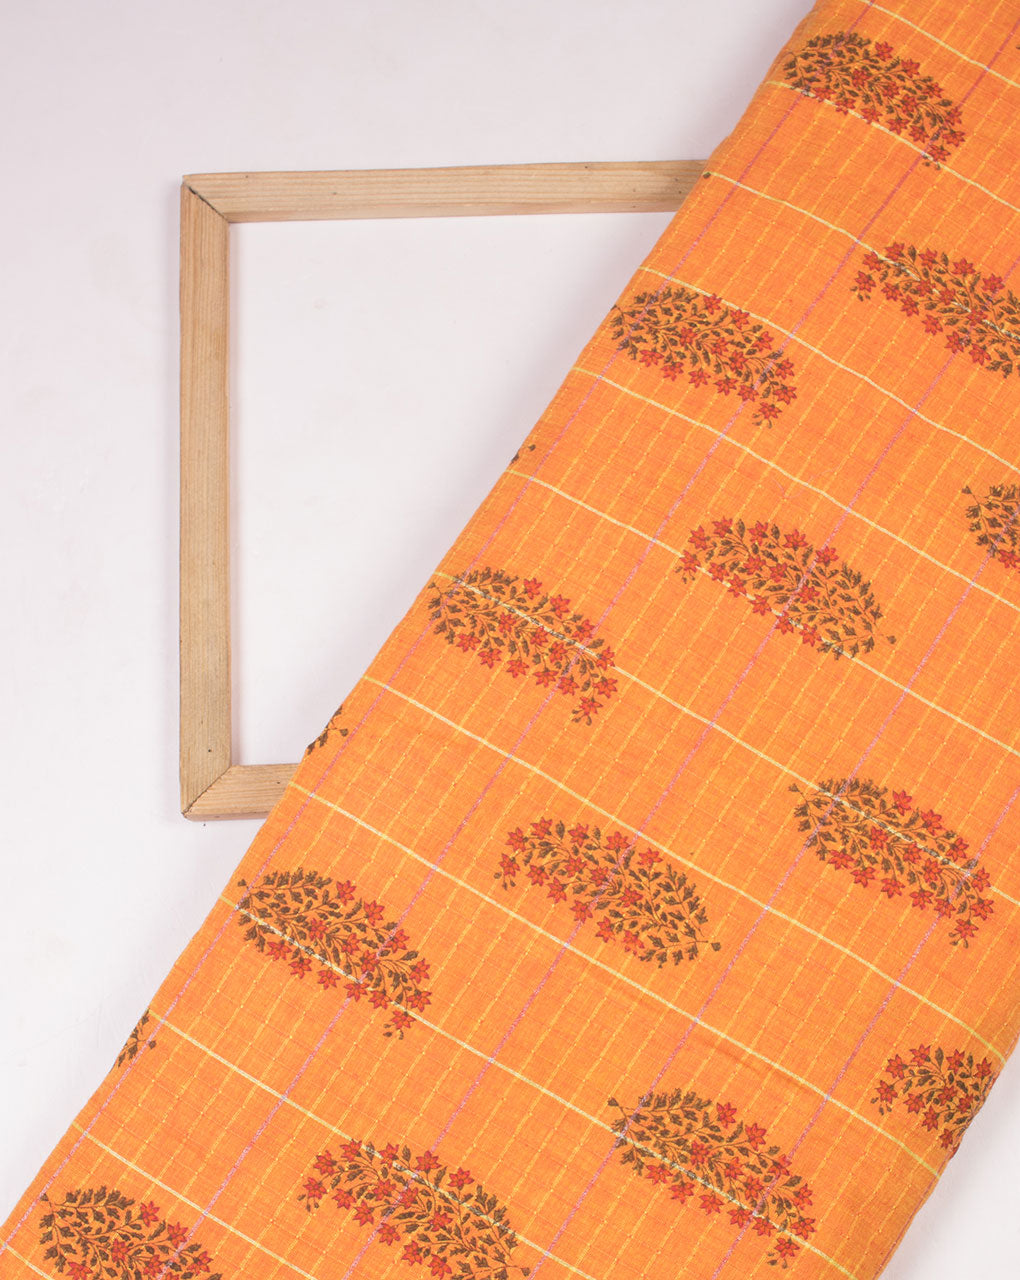 Screen Print Loom Textured Cotton Fabric - Fabriclore.com